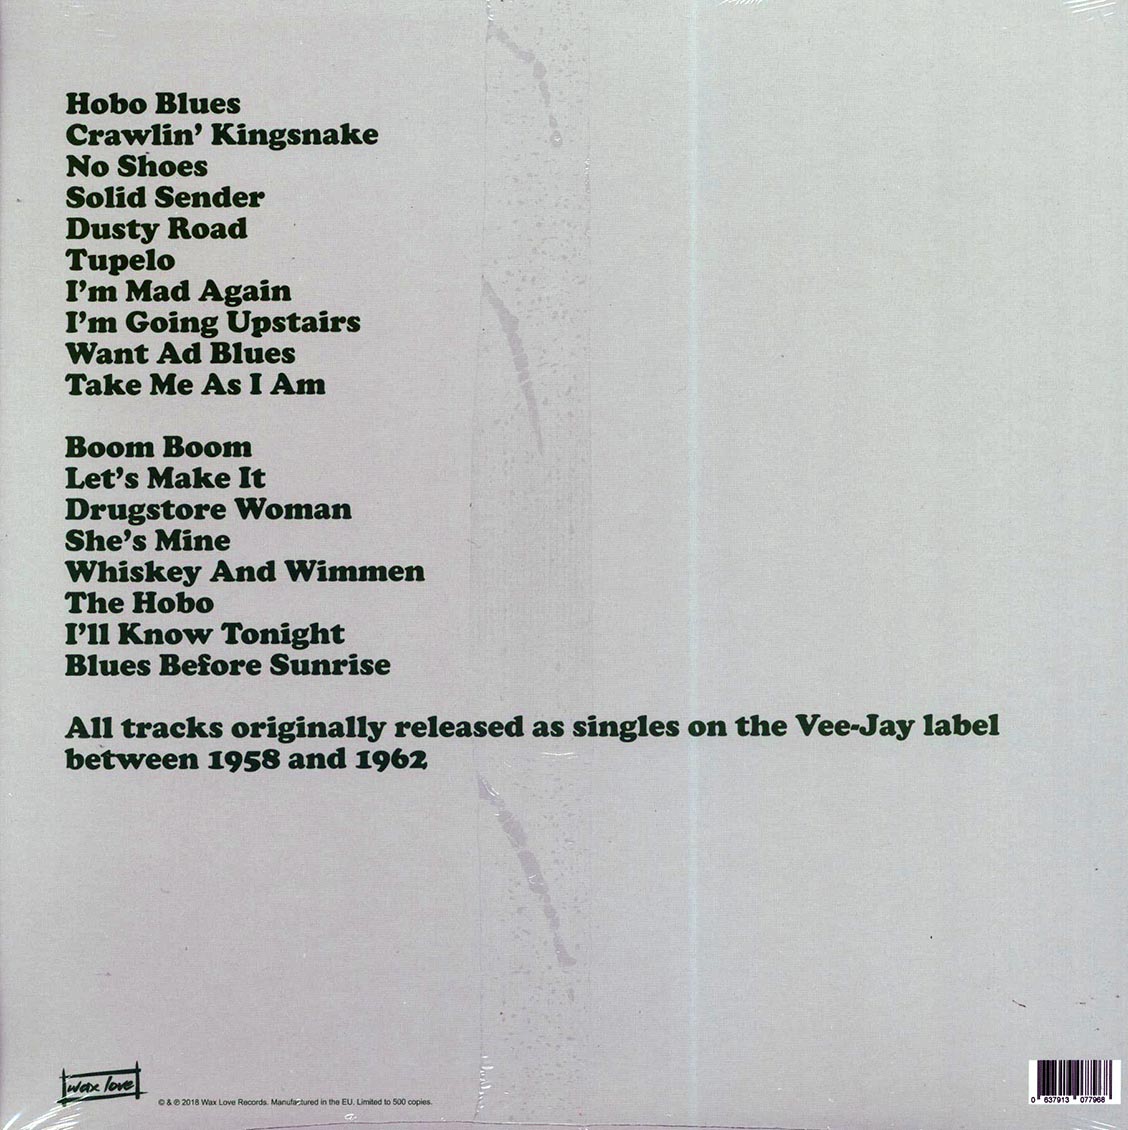 John Lee Hooker (존 리 후커) - Boom Boom : Vee-Jay Singles 1959-1962 [LP] 